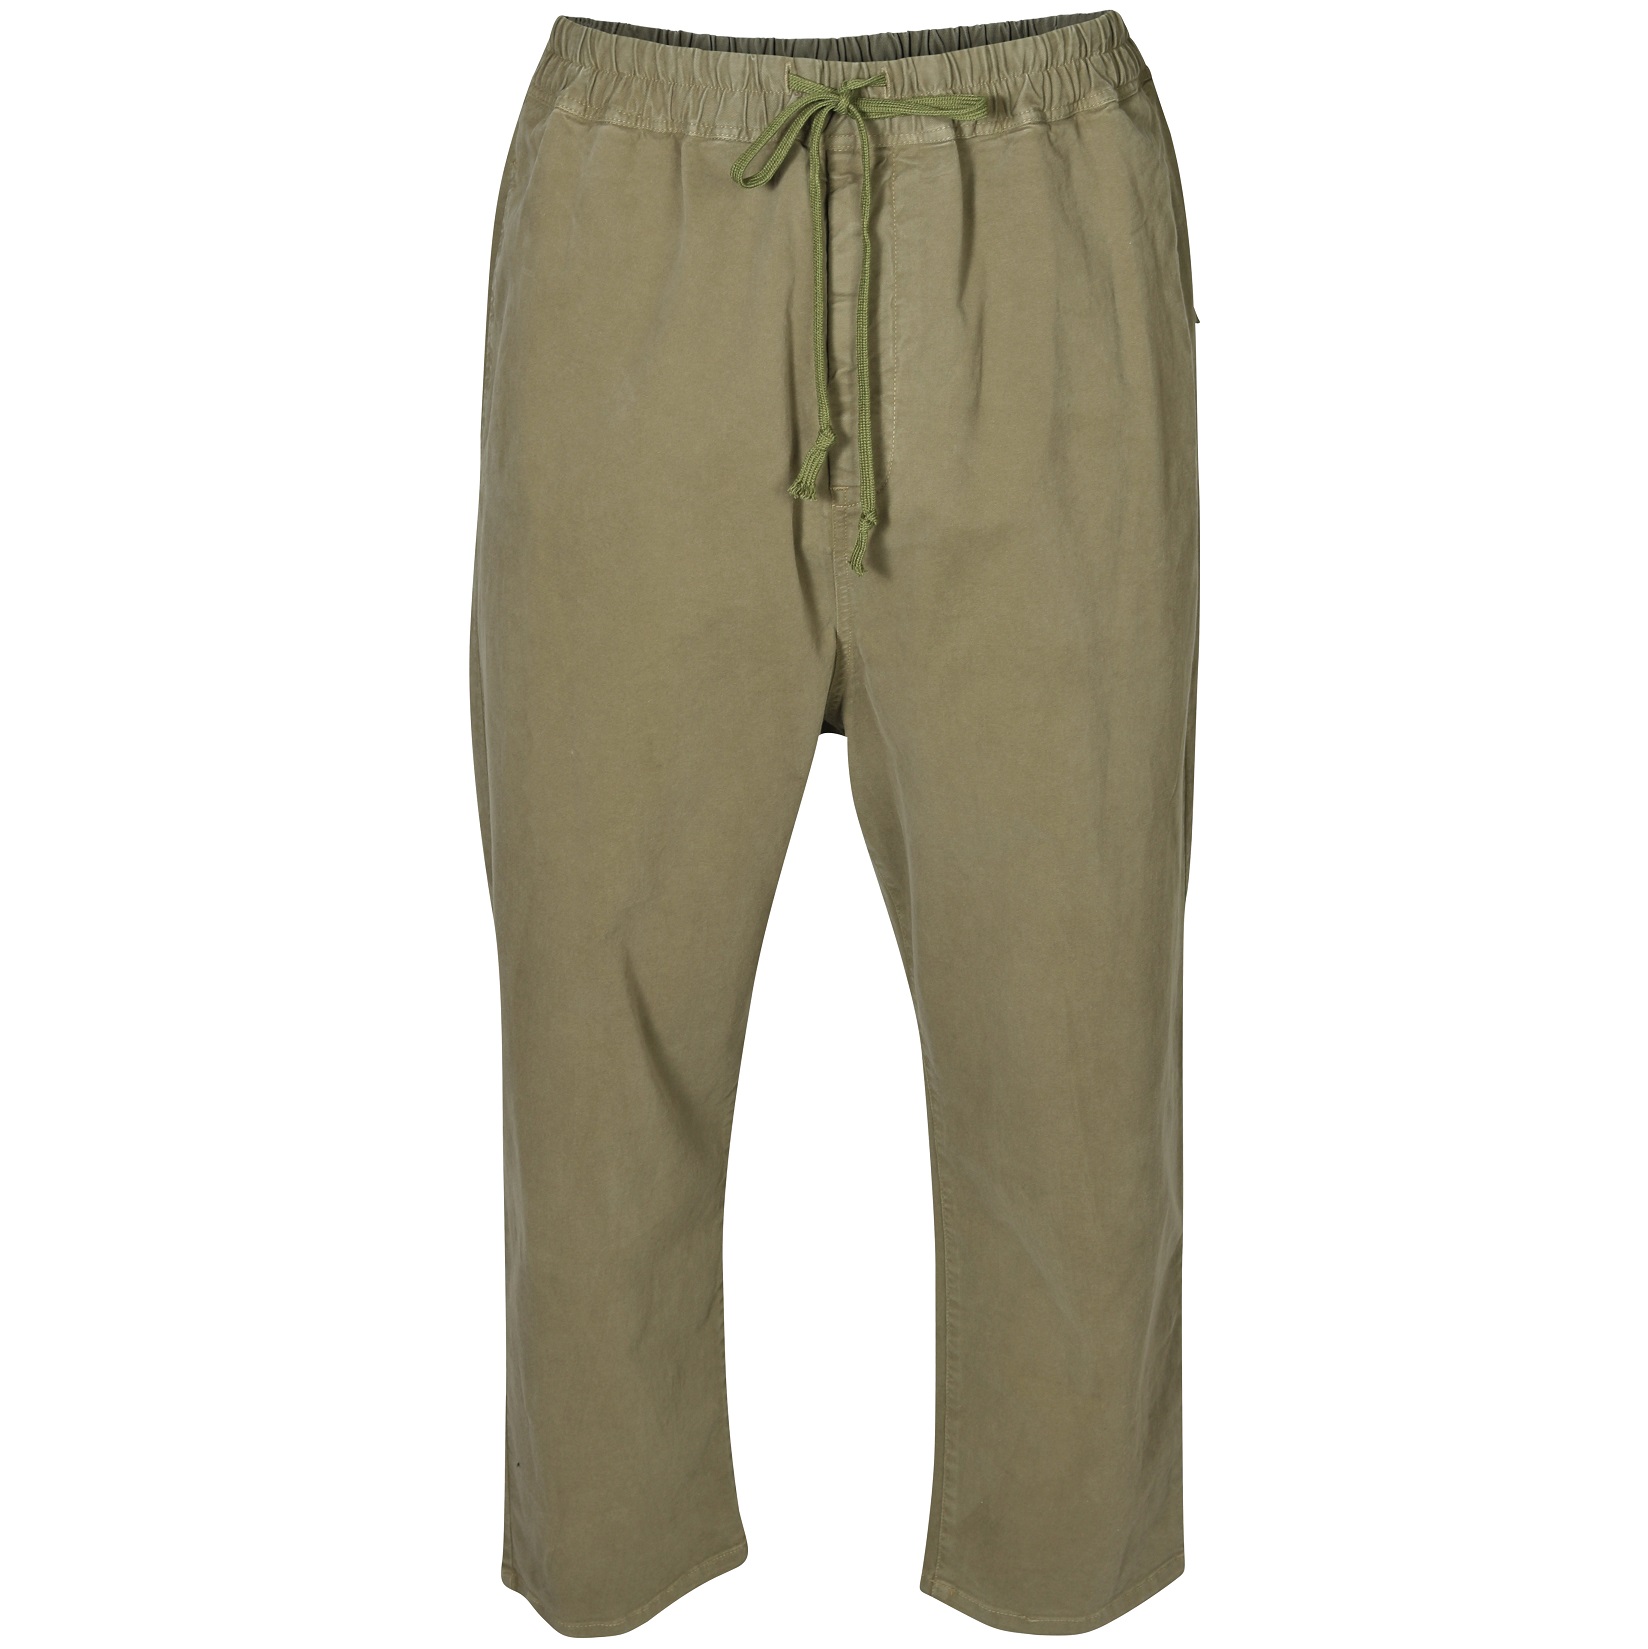 NILI LOTAN Walker Cotton Pant in Olive Green M